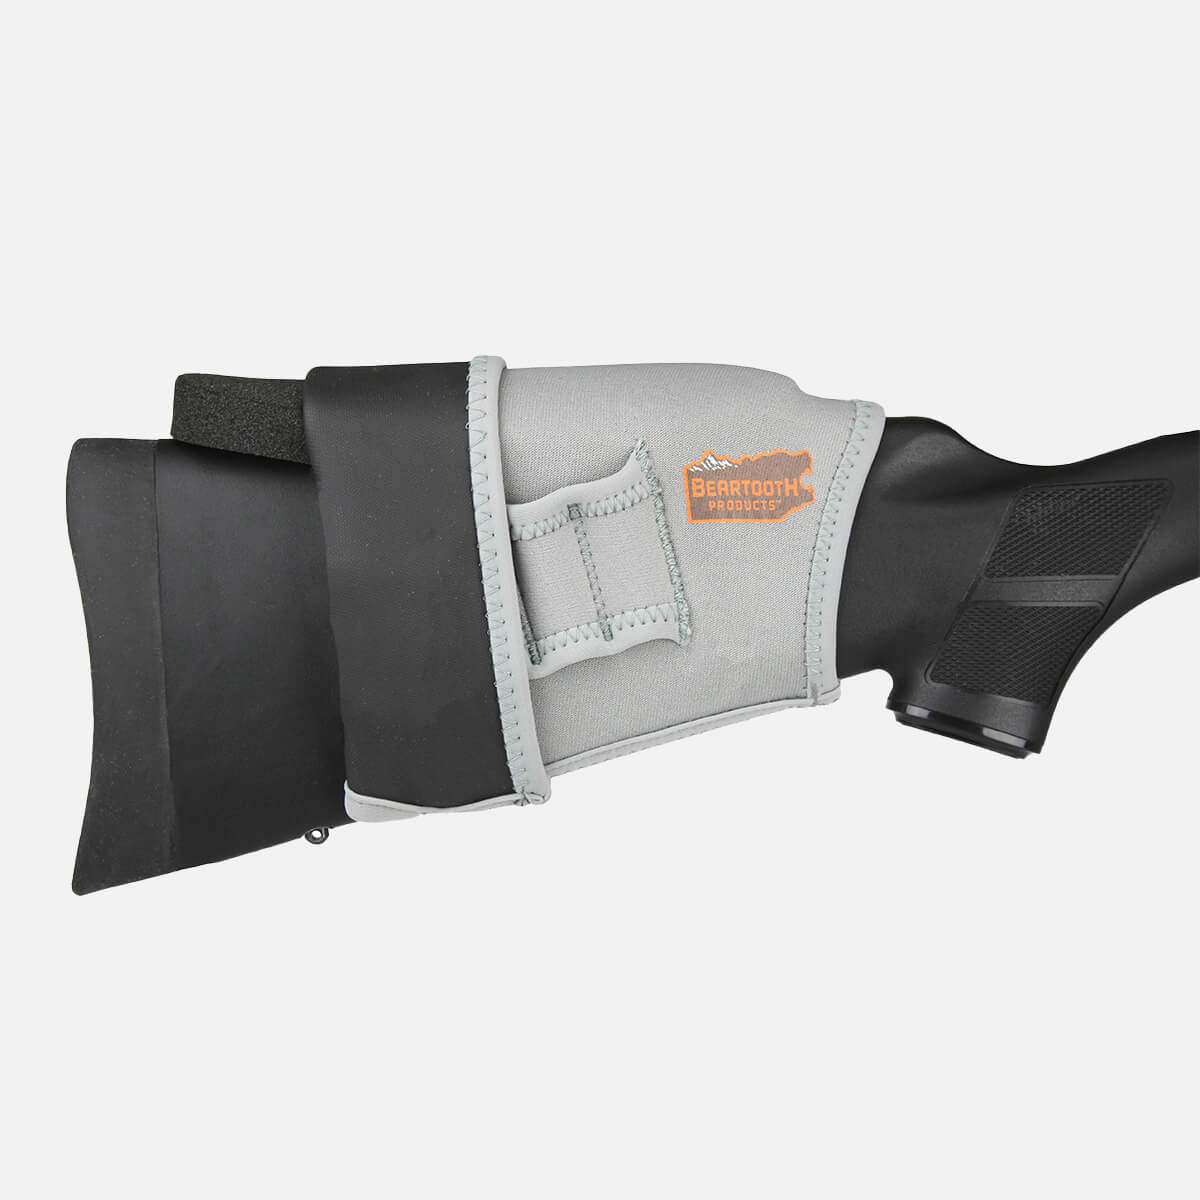 COMB RAISING KIT 2.0 - Rifle Model in Steel Gray